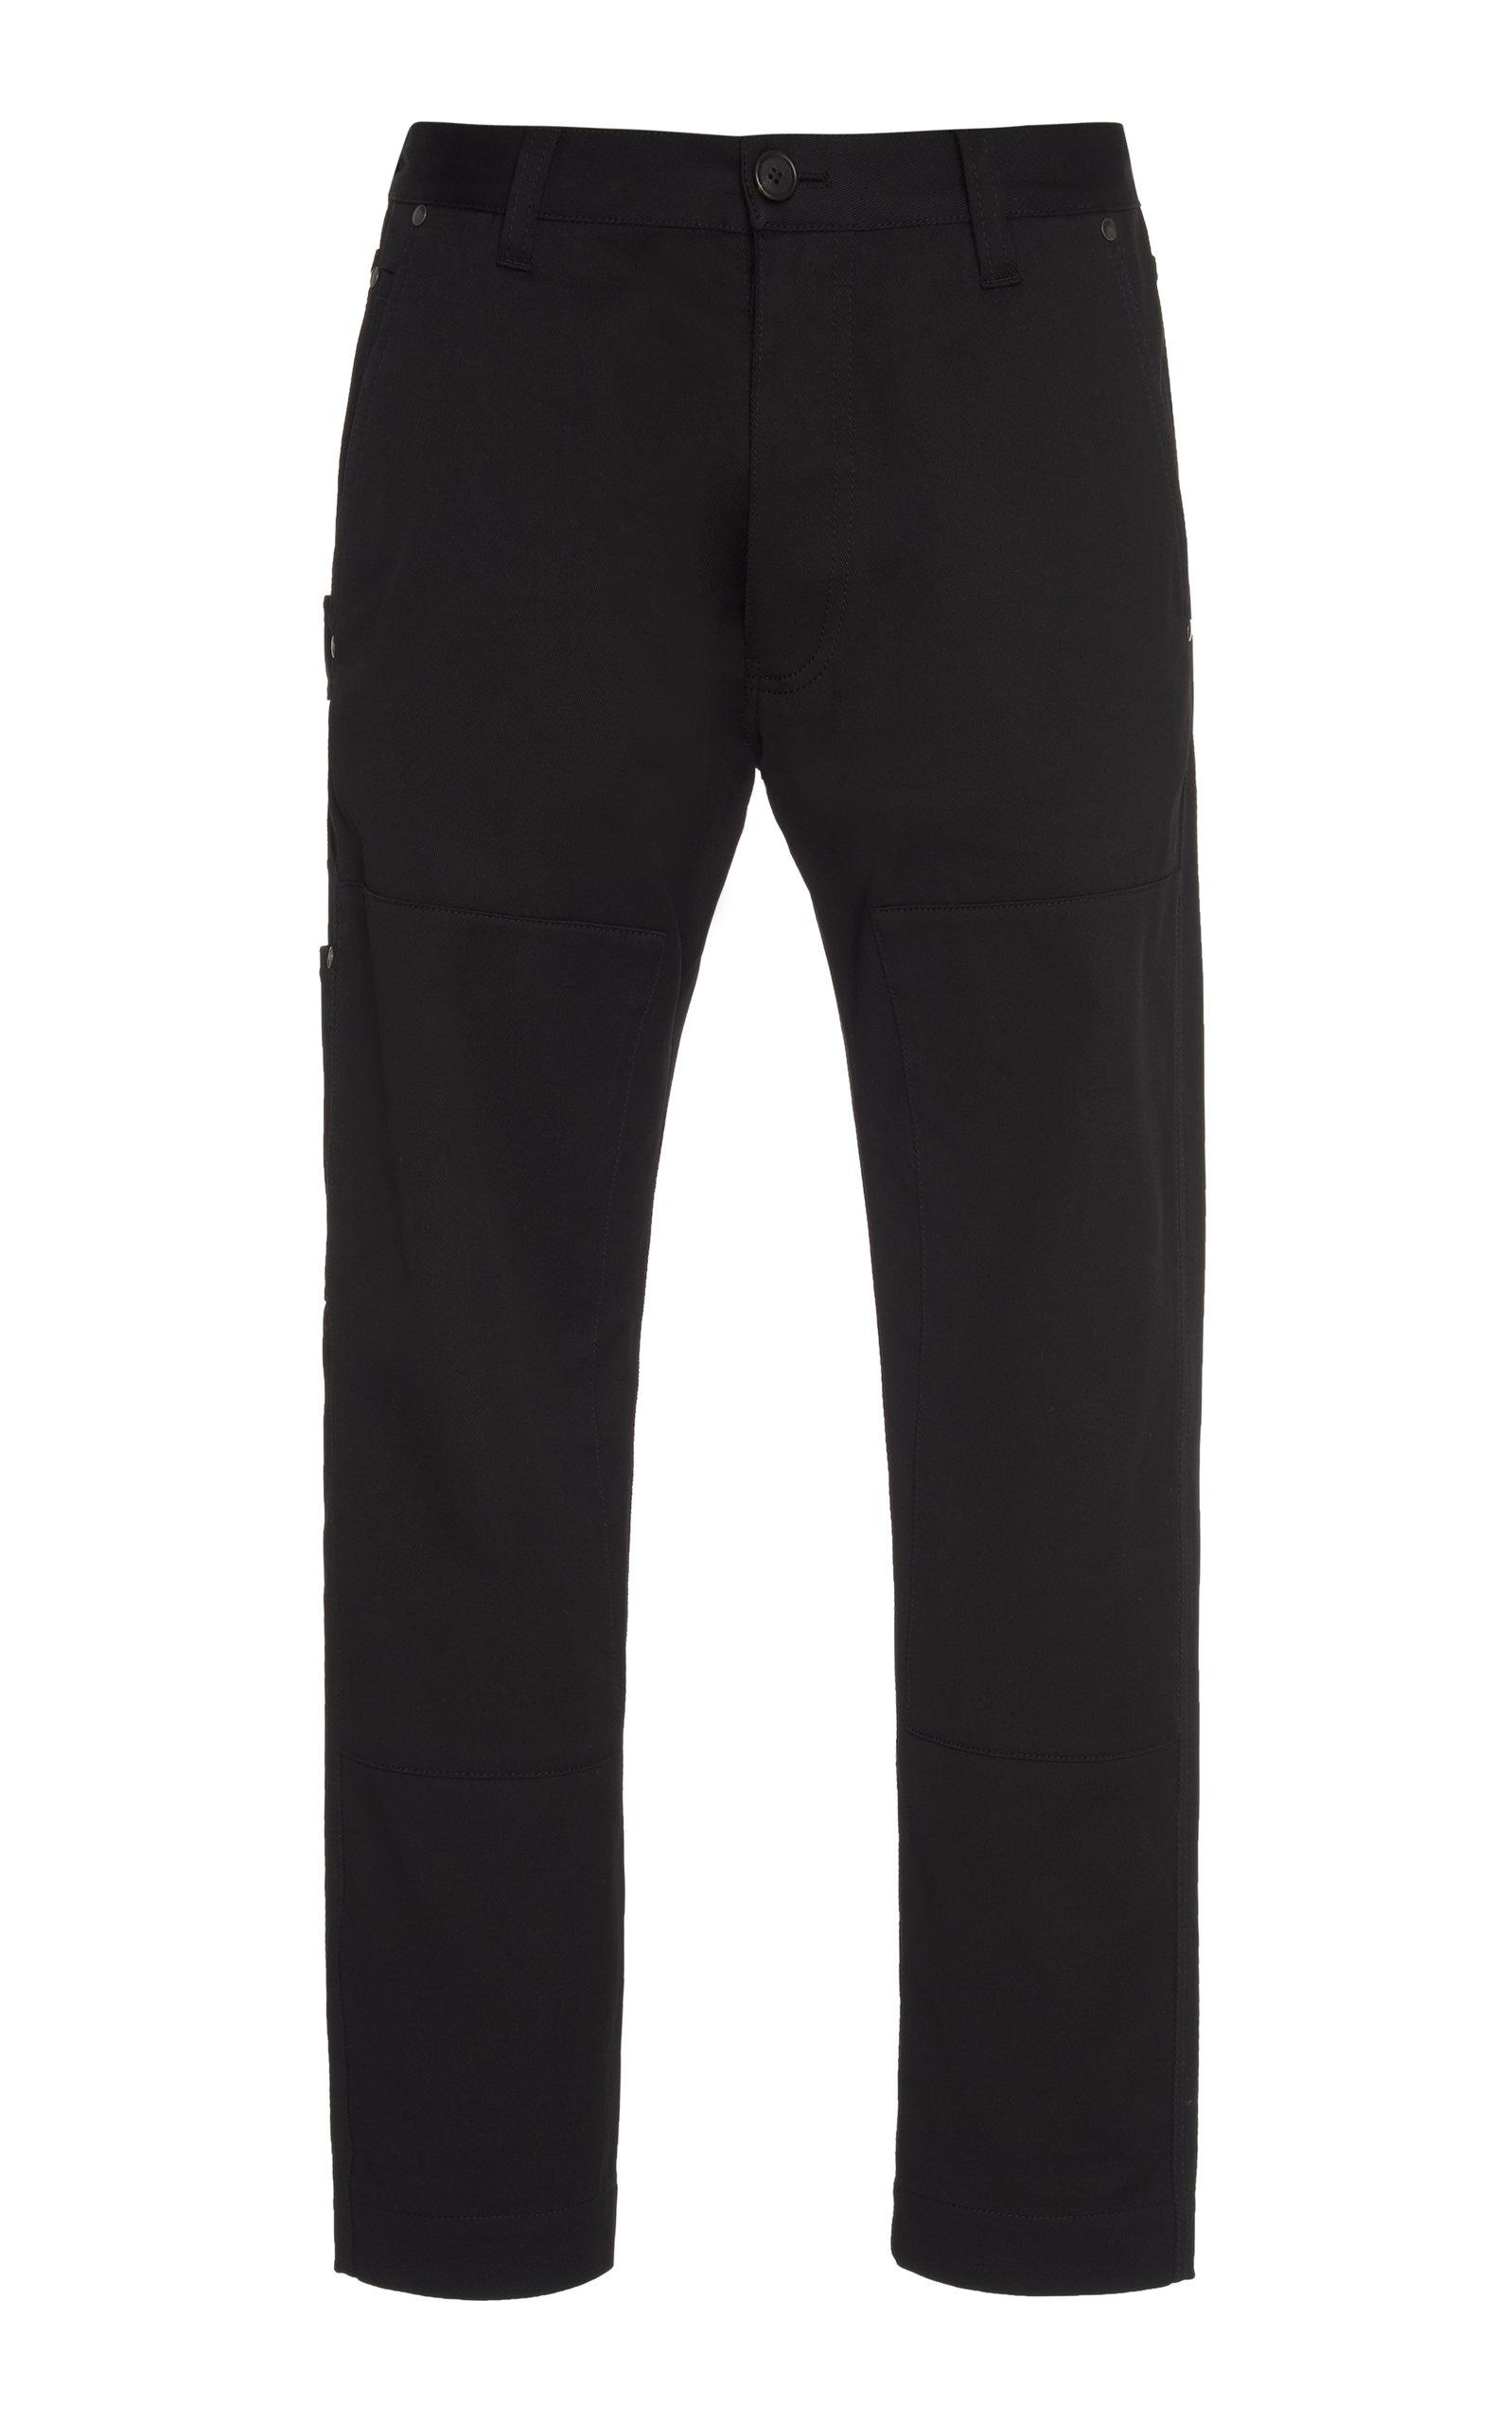 Prada Cotton-twill Cargo Pants in Black for Men - Lyst